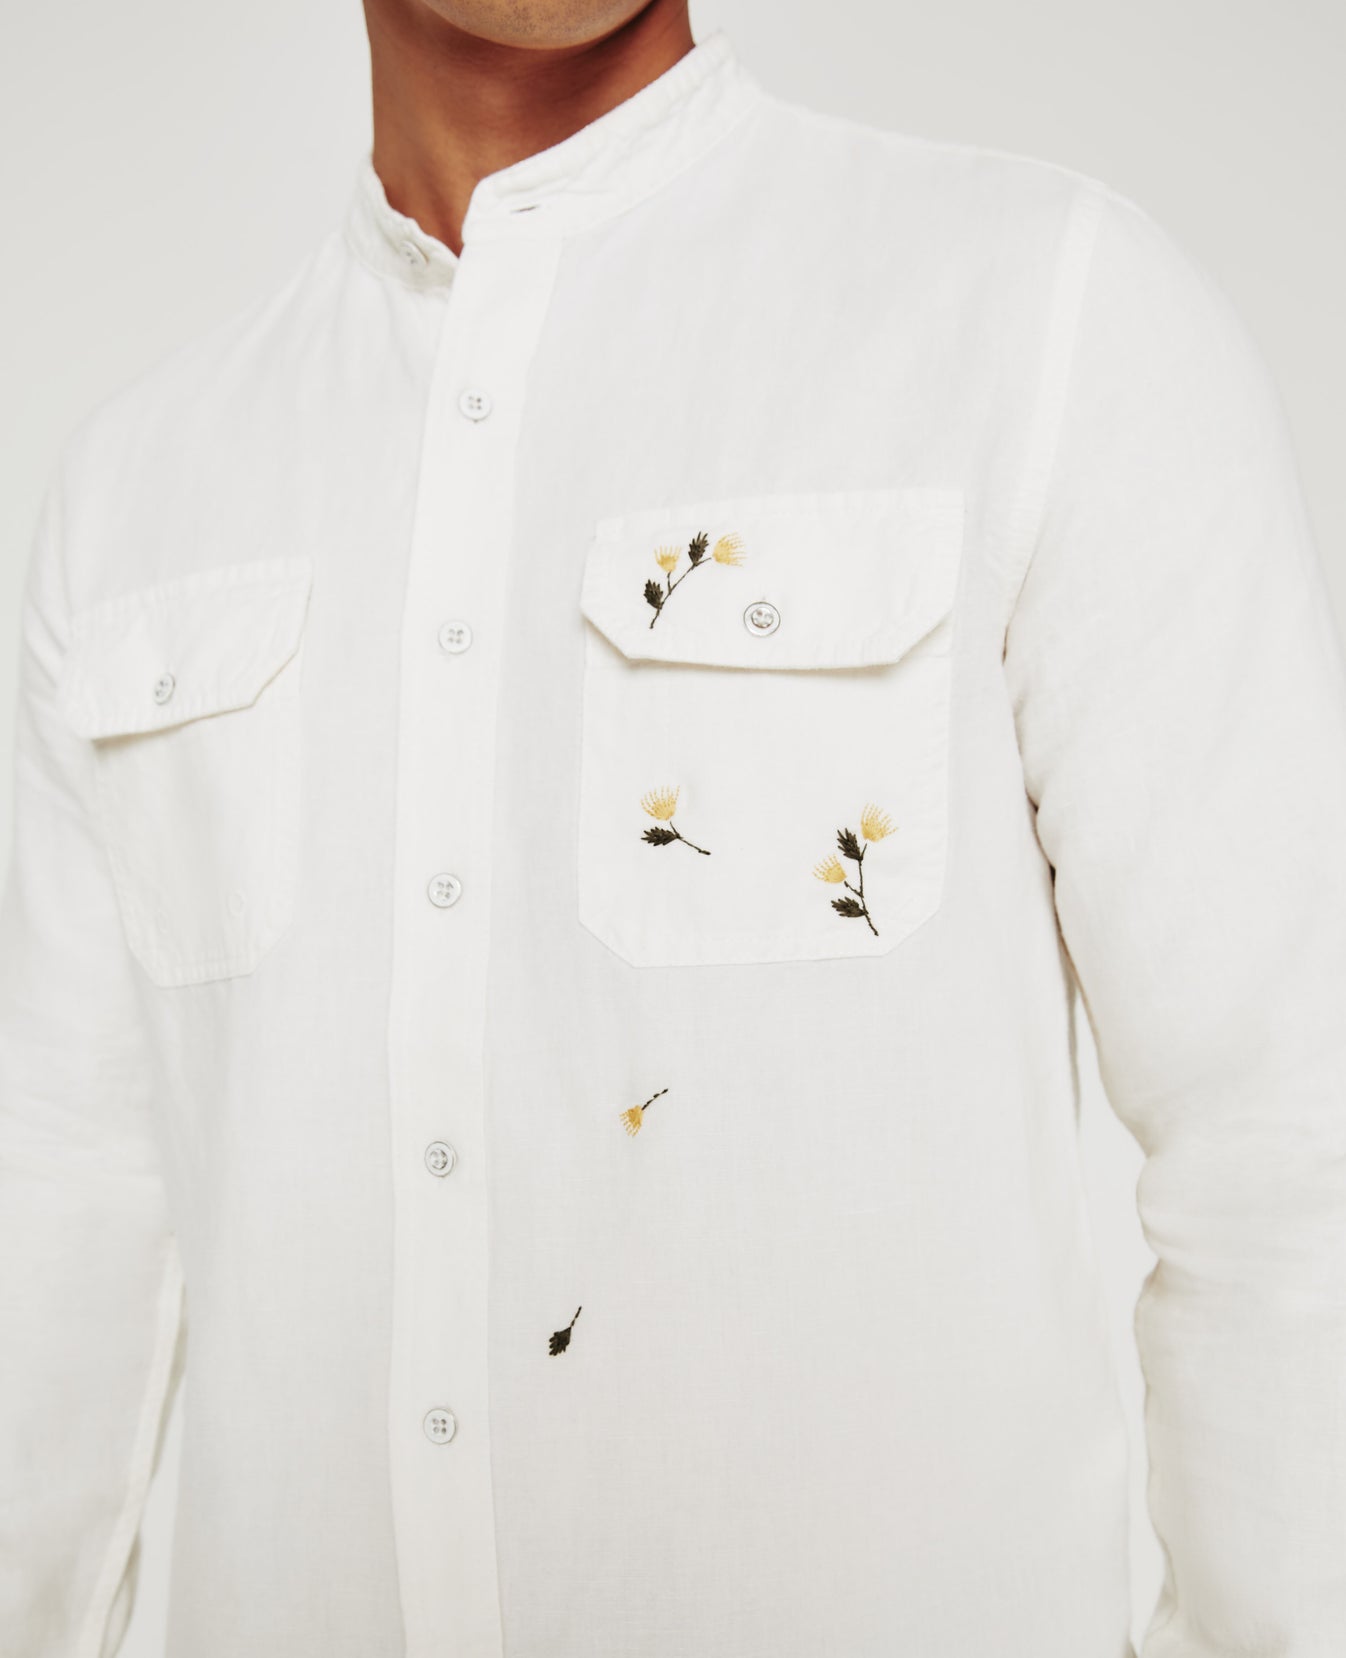 Benning Sleeve Patch Shirt Eb Super Bloom White Linen Mens Top Photo 2